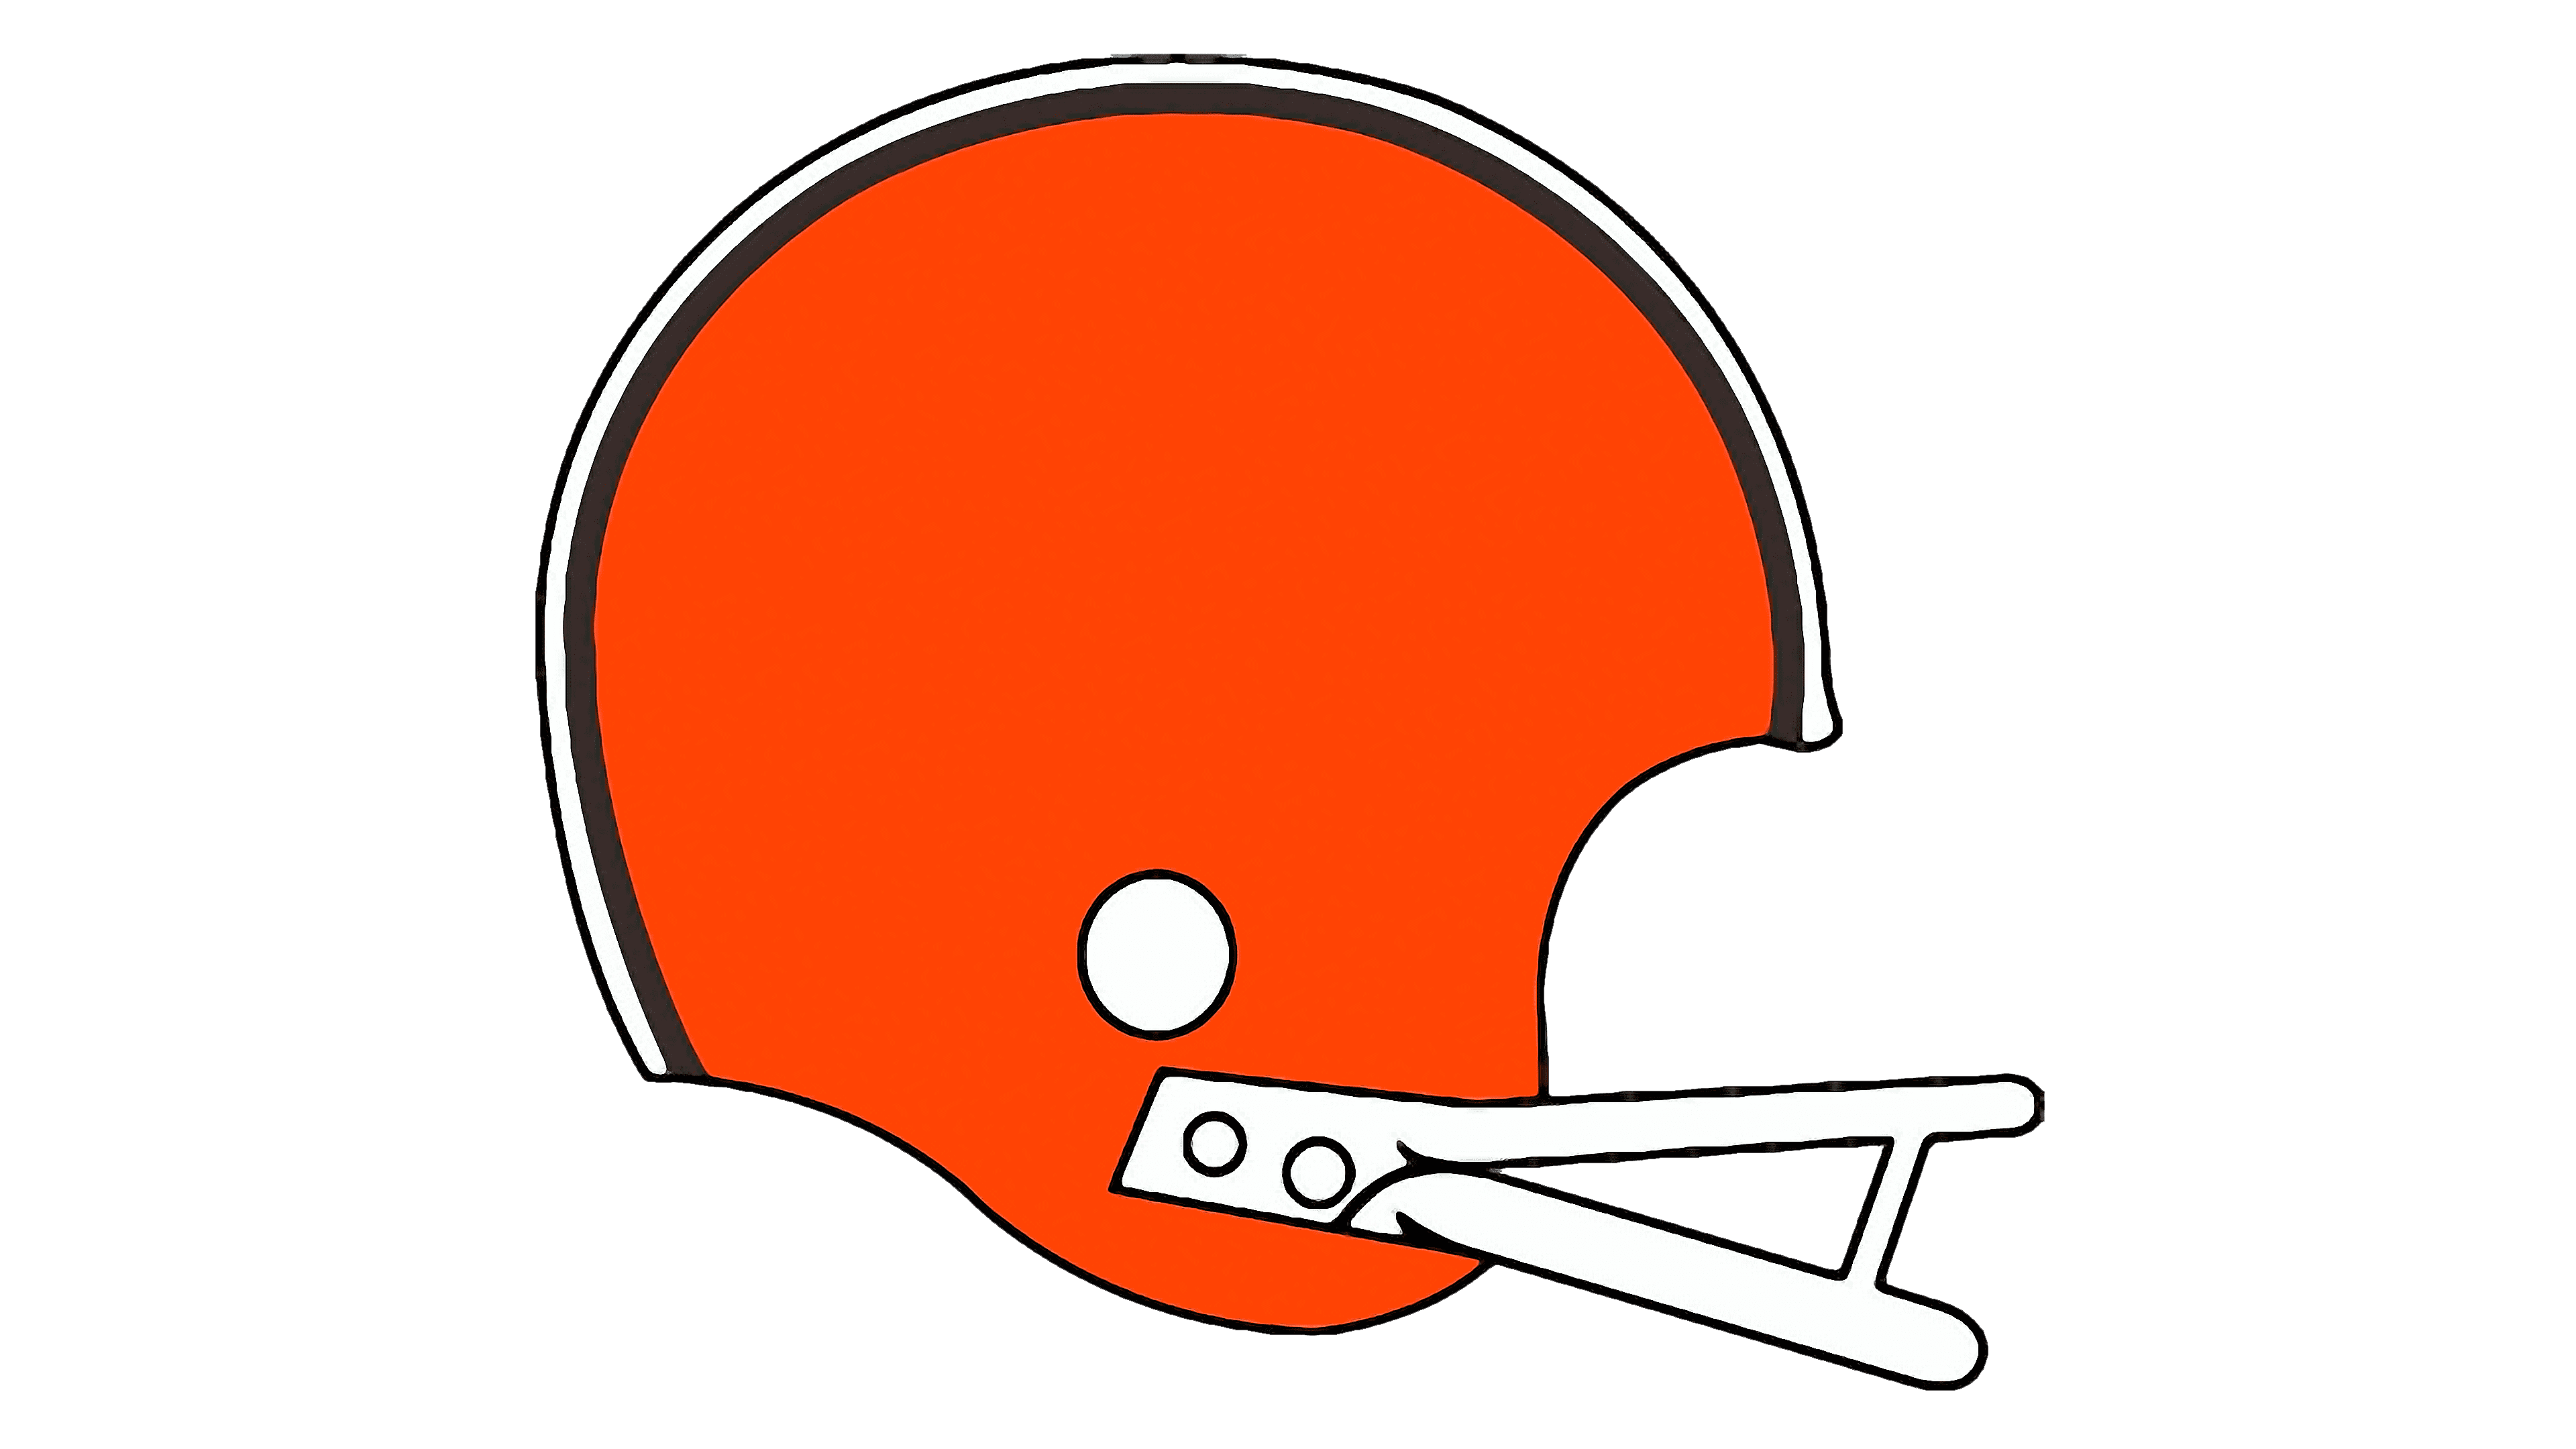 Cleveland Browns Logo Png